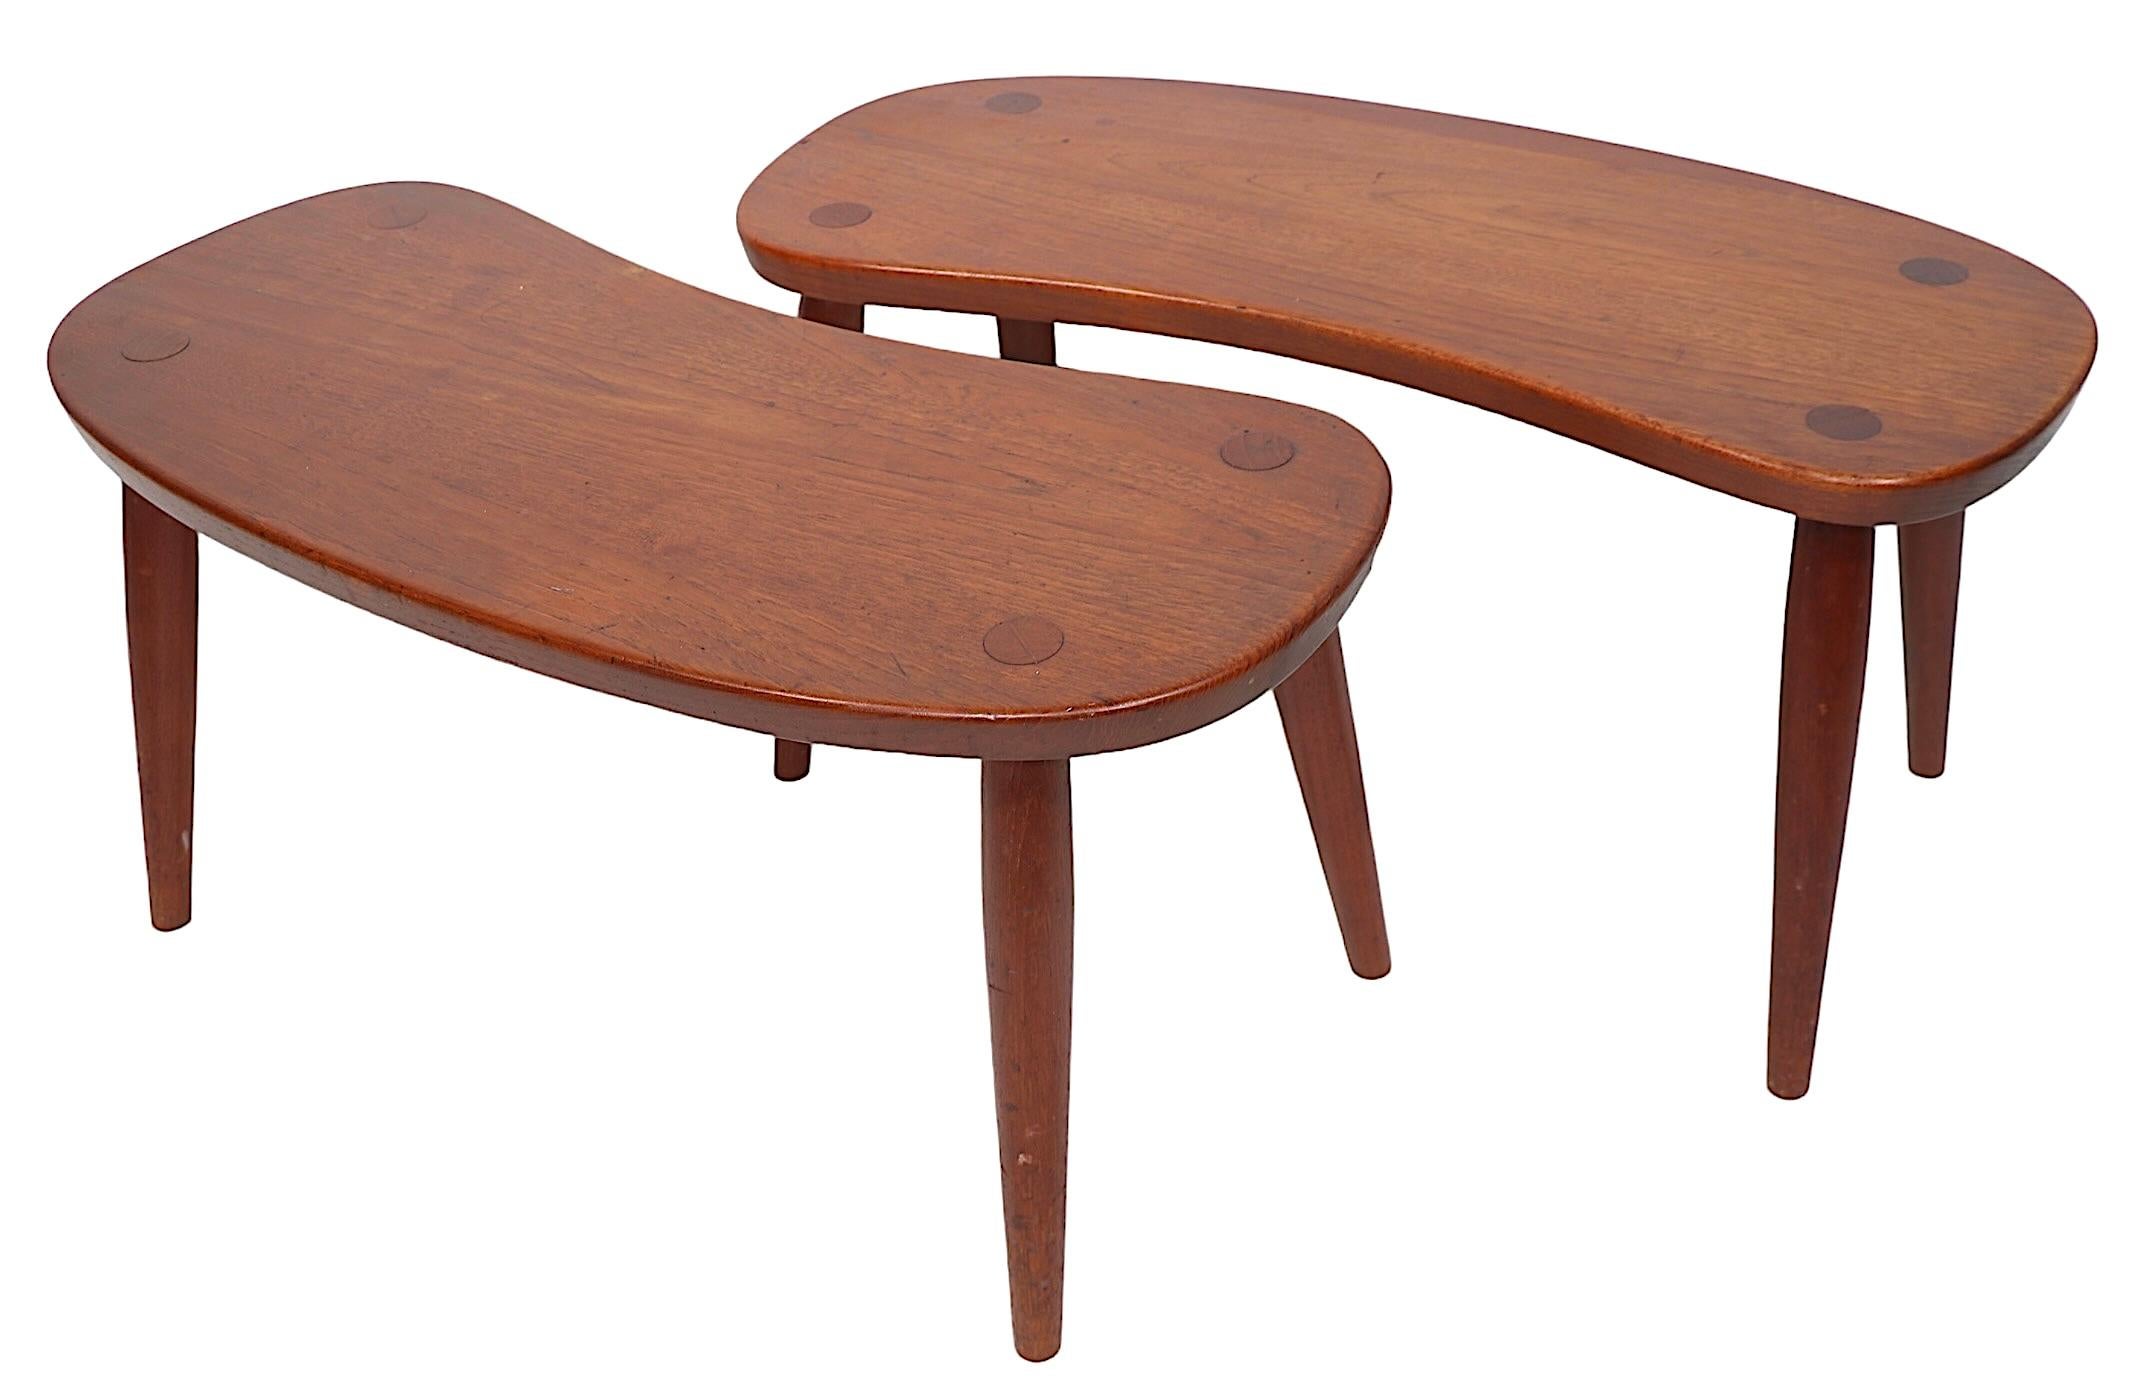 Pr. Danish Mid Century Modern Tables Made by Illum Bolighus att. to Josef Frank  For Sale 6